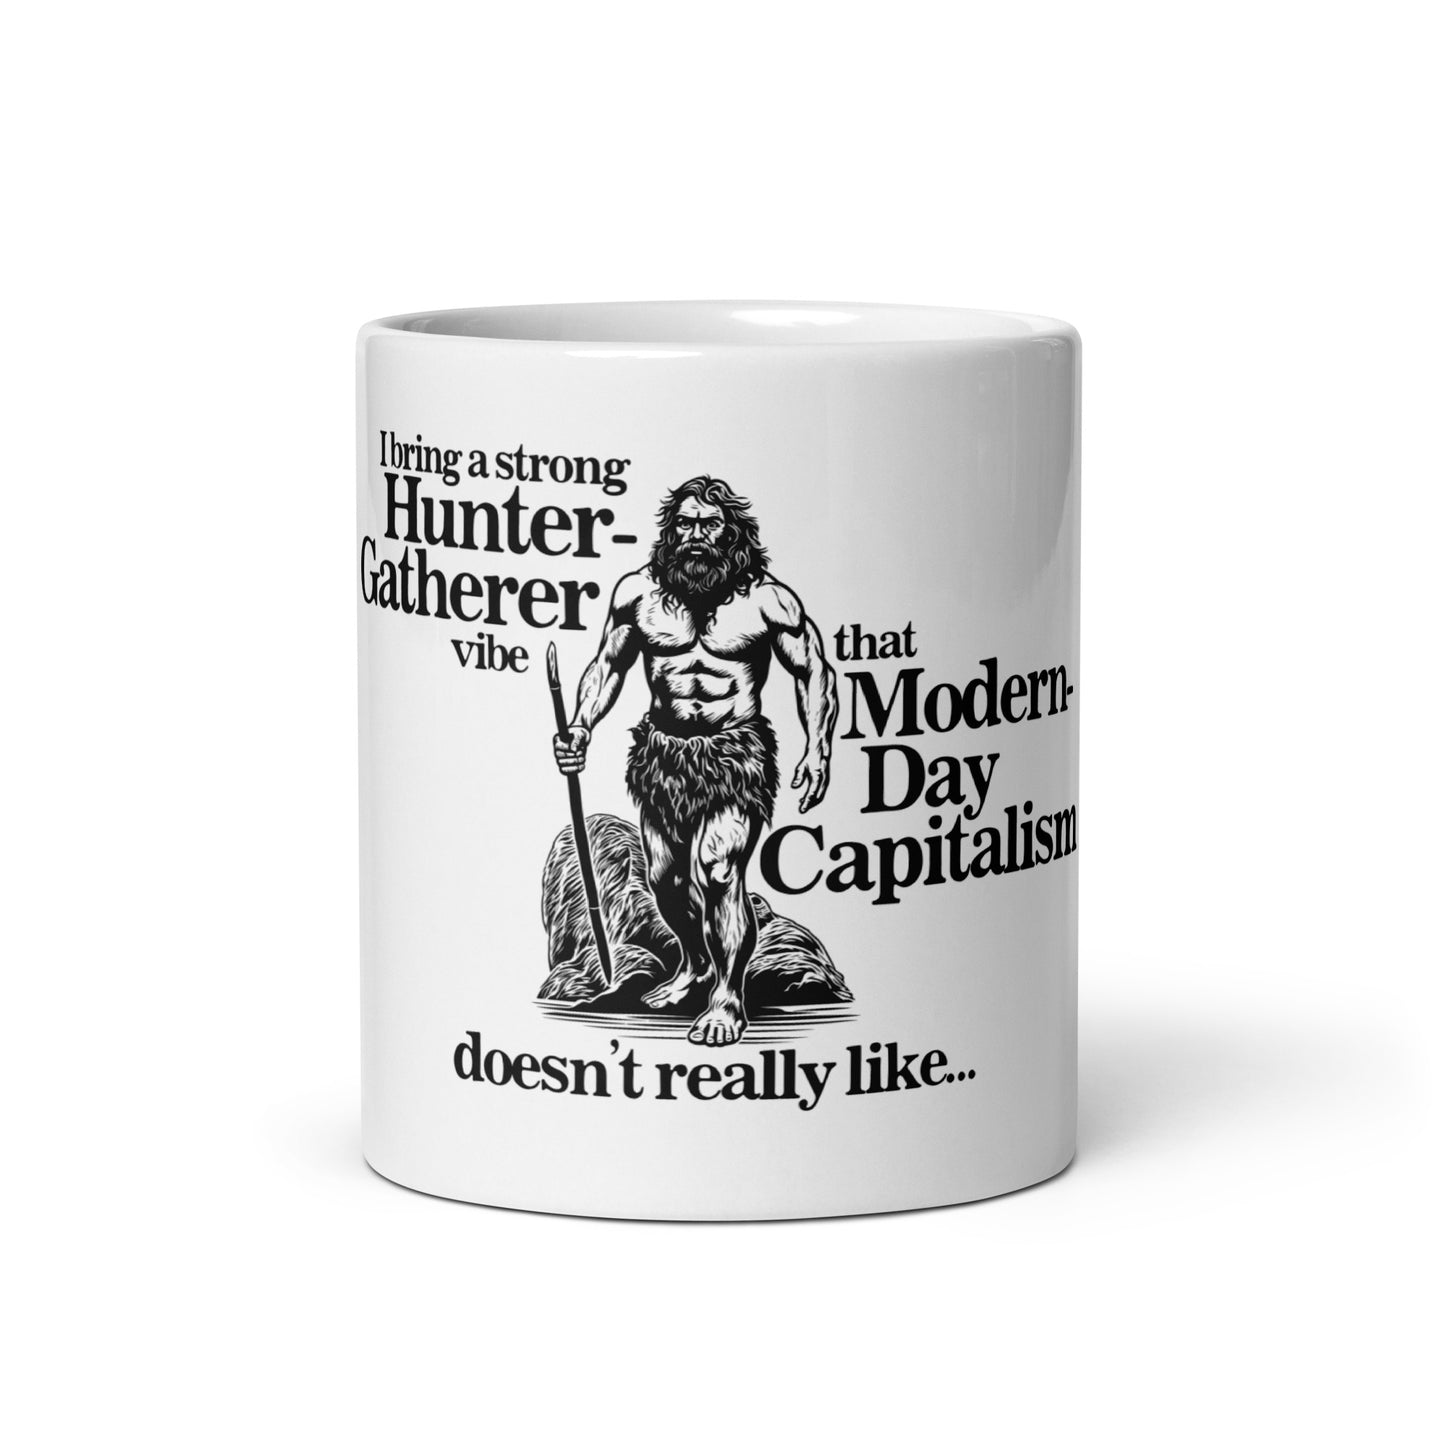 A Strong Hunter-Gatherer Vibe mug